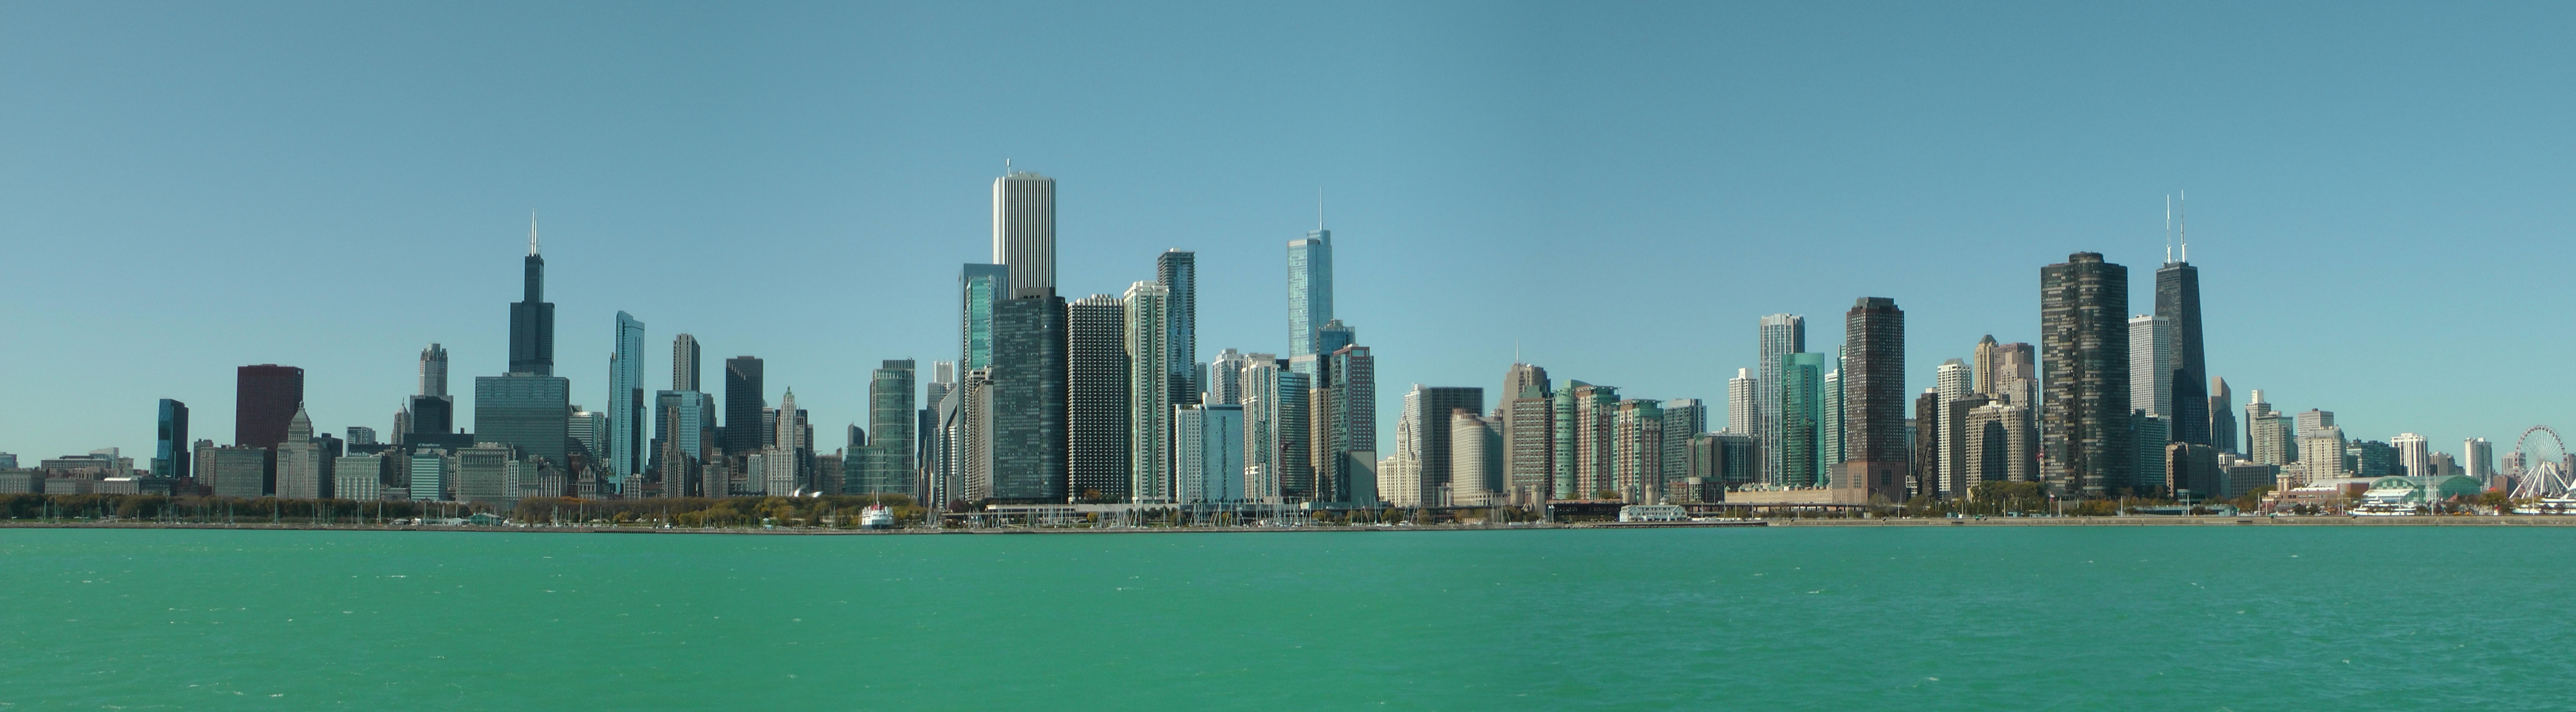 File:Chicago Skyline from Lake Michigan.jpg - Wikimedia Commons